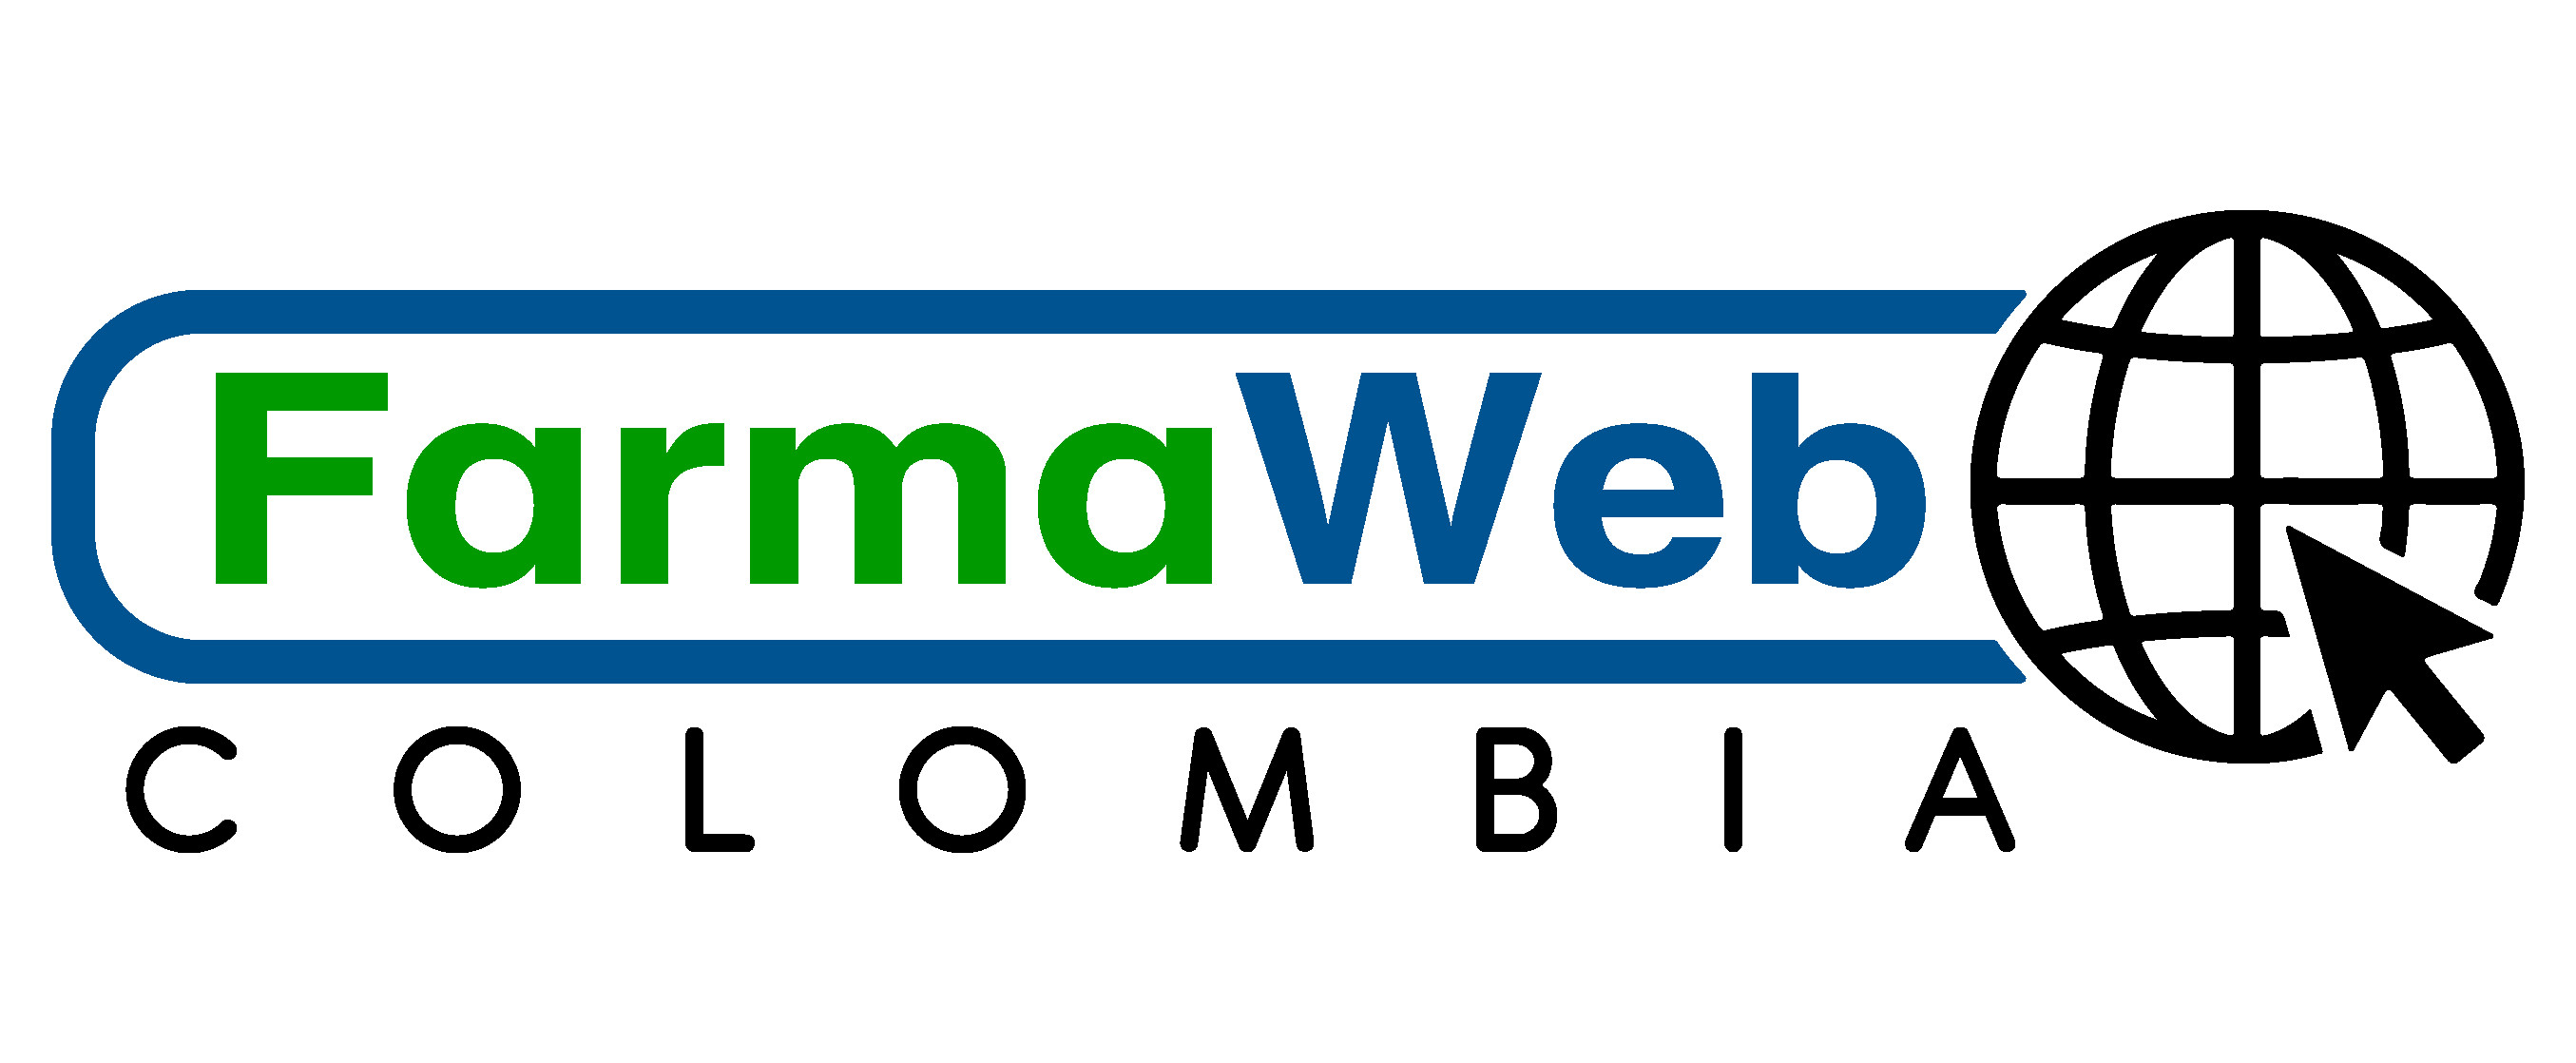 FarmaWebColombia su Farmacia Web 